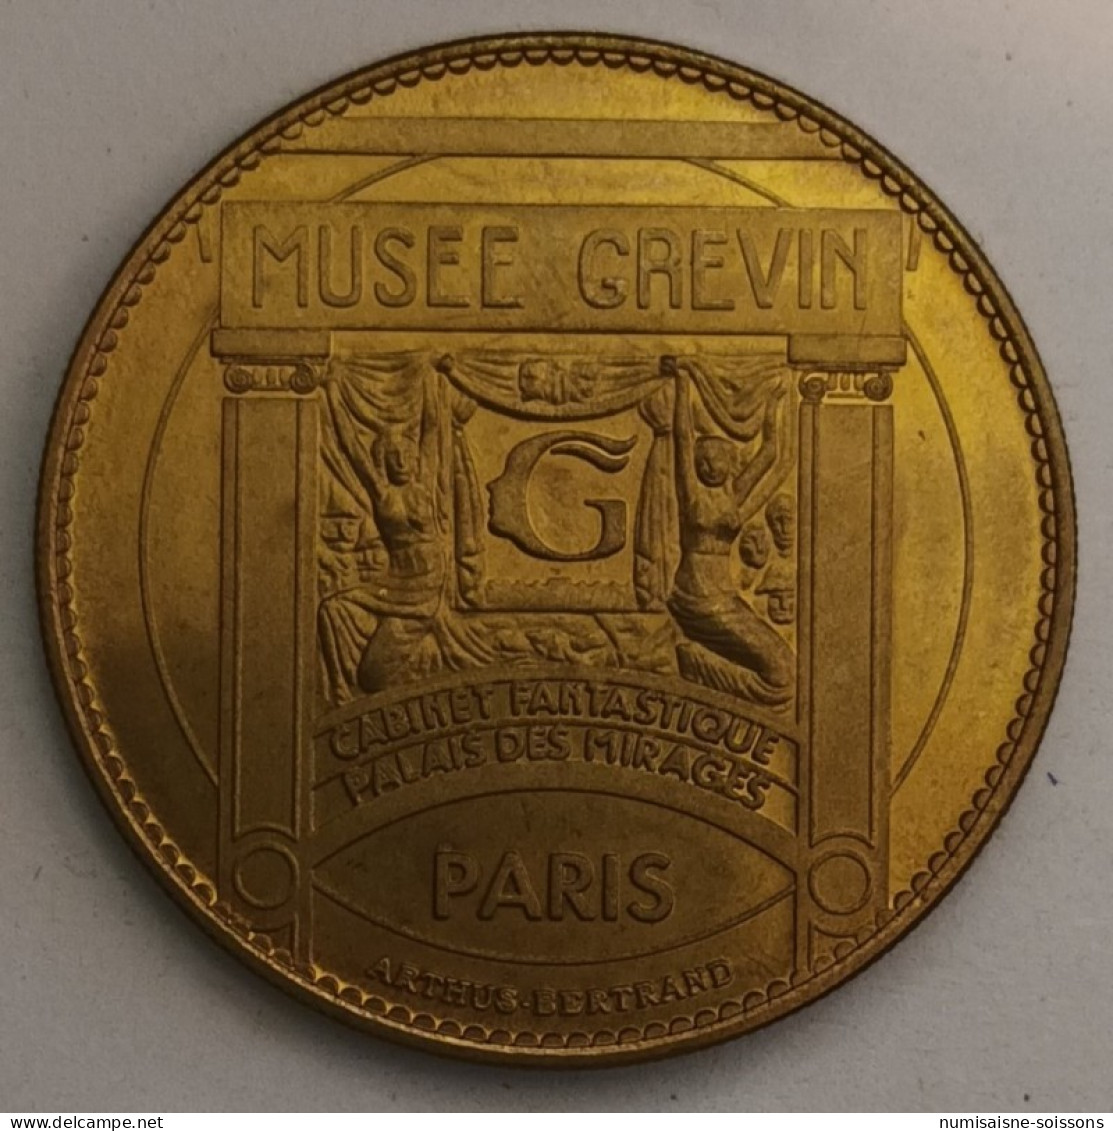 75 - PARIS - MUSEE GRÉVIN - LORIE - ARTHUS BERTRAND - Zonder Datum